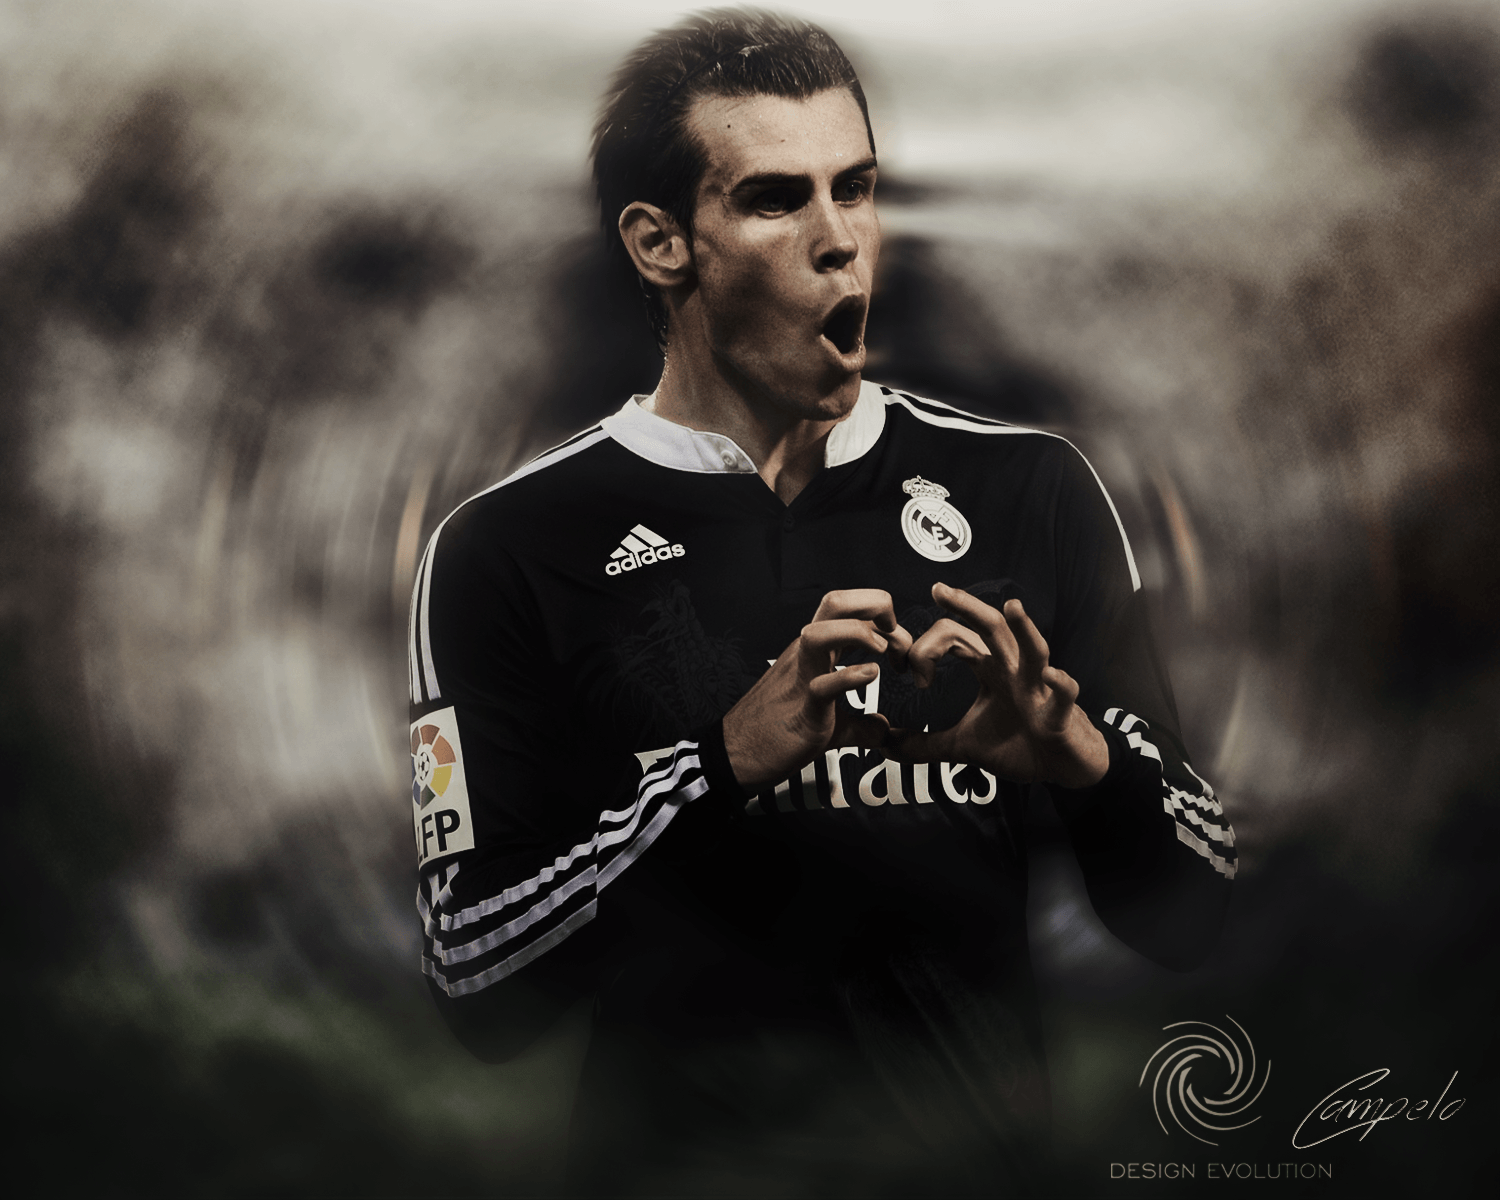 Gareth Bale Wallpaper, HDQ 2016 Gareth Bale Image Collection